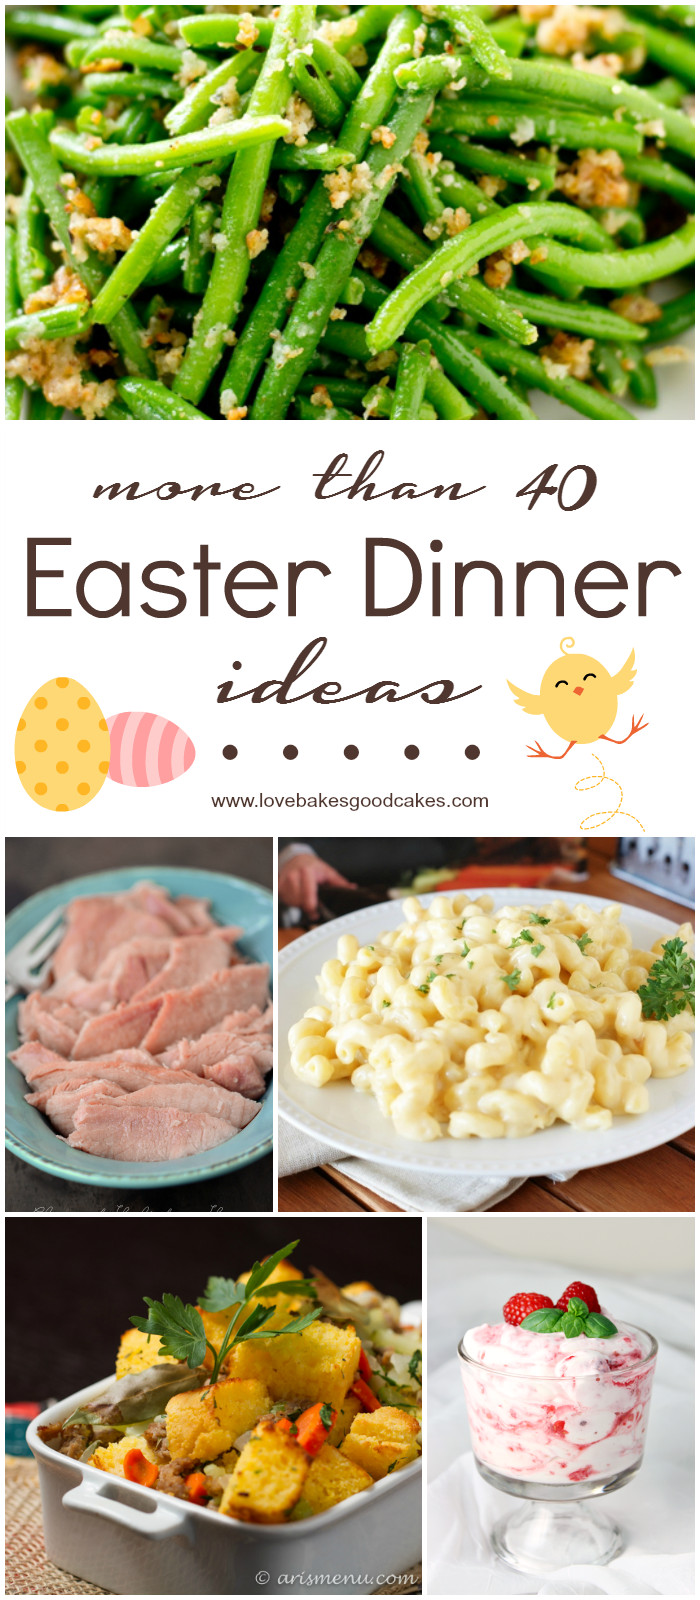 Easter Dinner Recipes Ideas
 More than 40 Easter Dinner Ideas